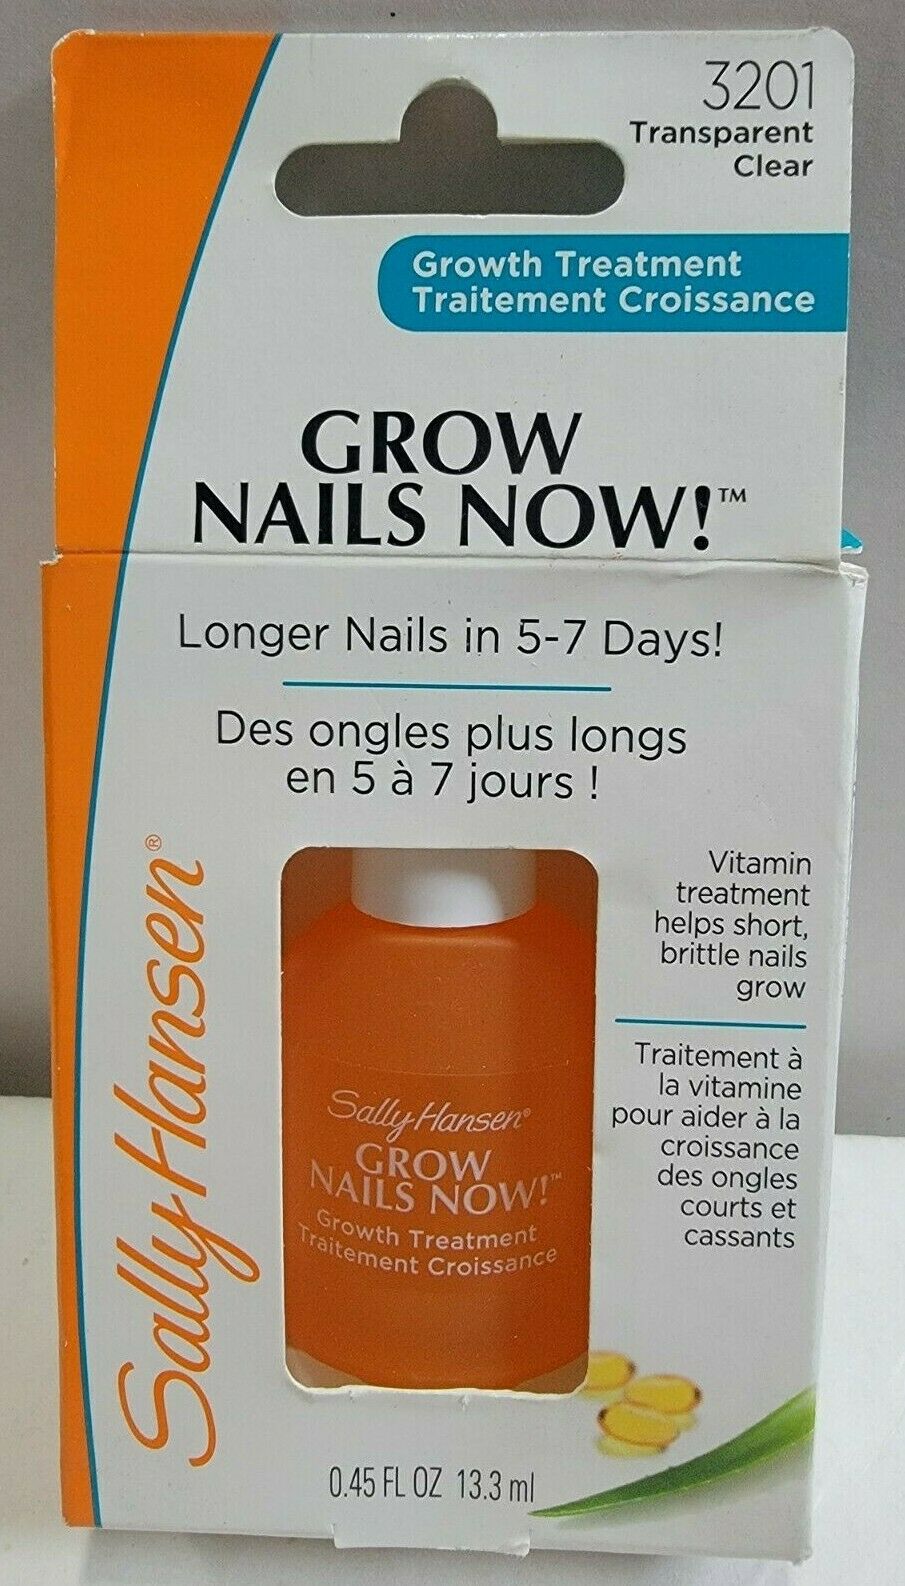 Sally Hansen Grow Nails Now Vitamin Treatment 3201 Buy 2 Get 1 Free Add 3 Tocart